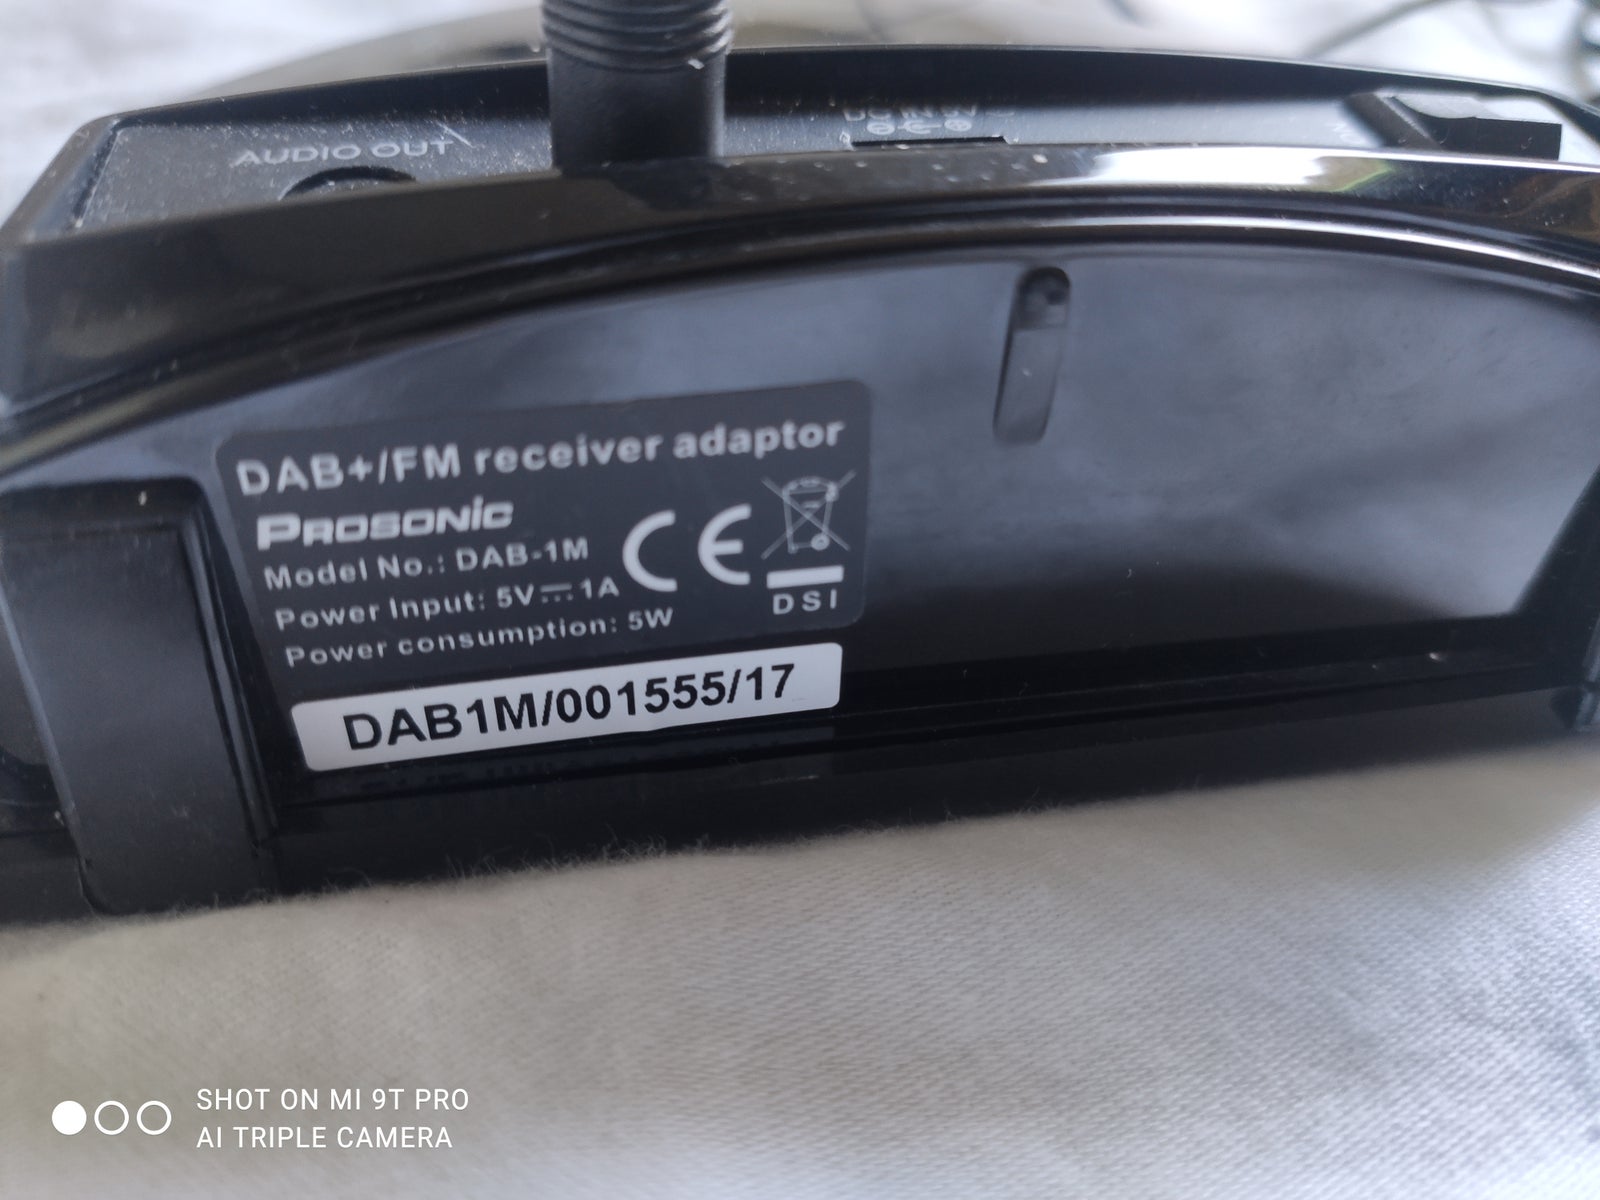 DAB-radio, Prosonic, Prosonic dab+fm adapter